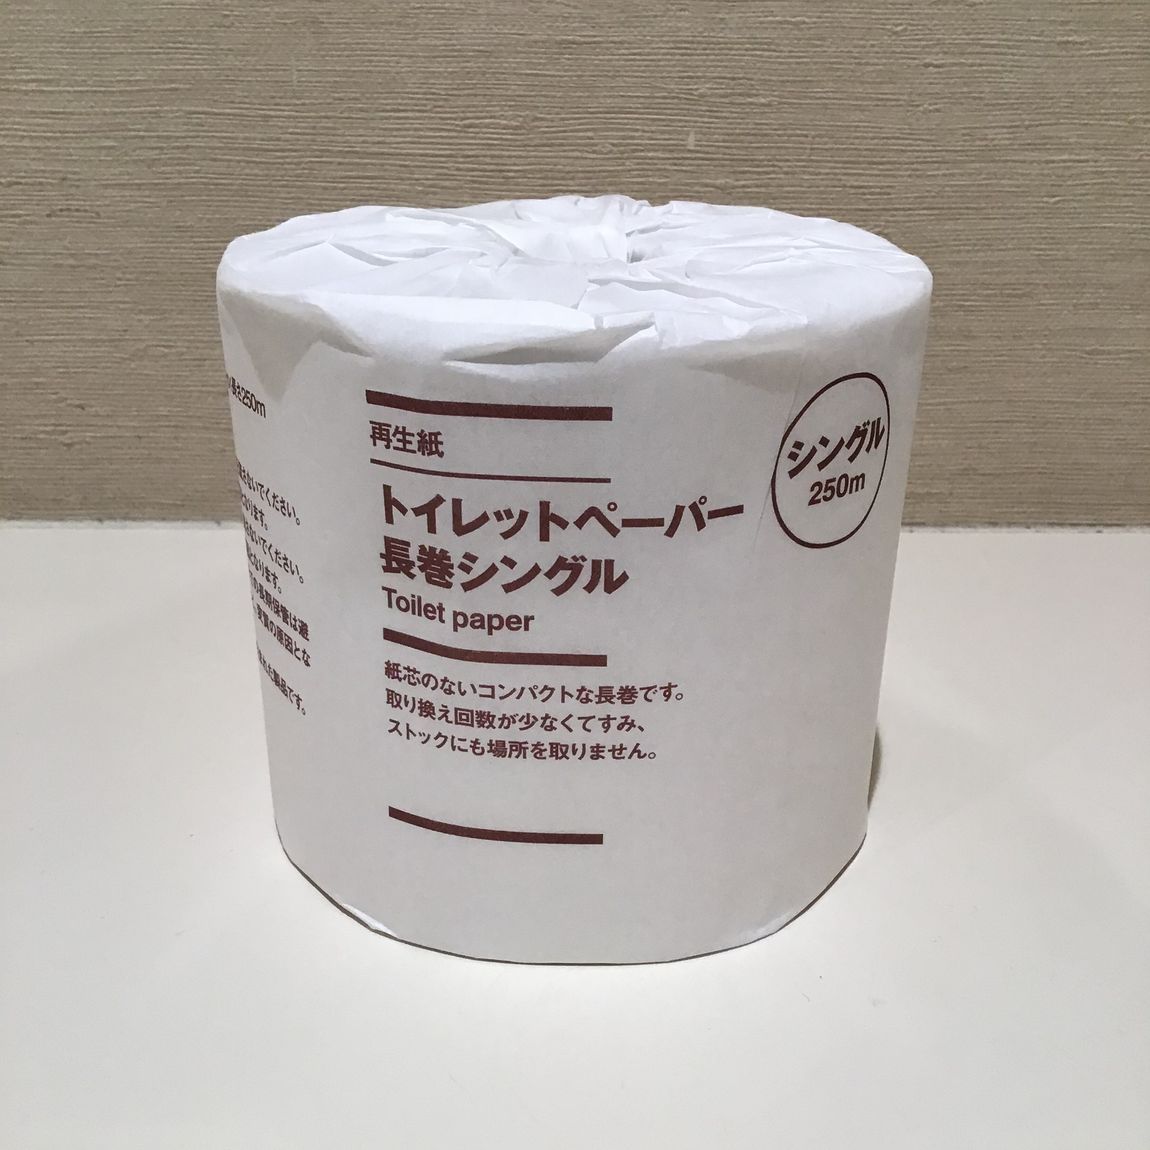 toilet paper single